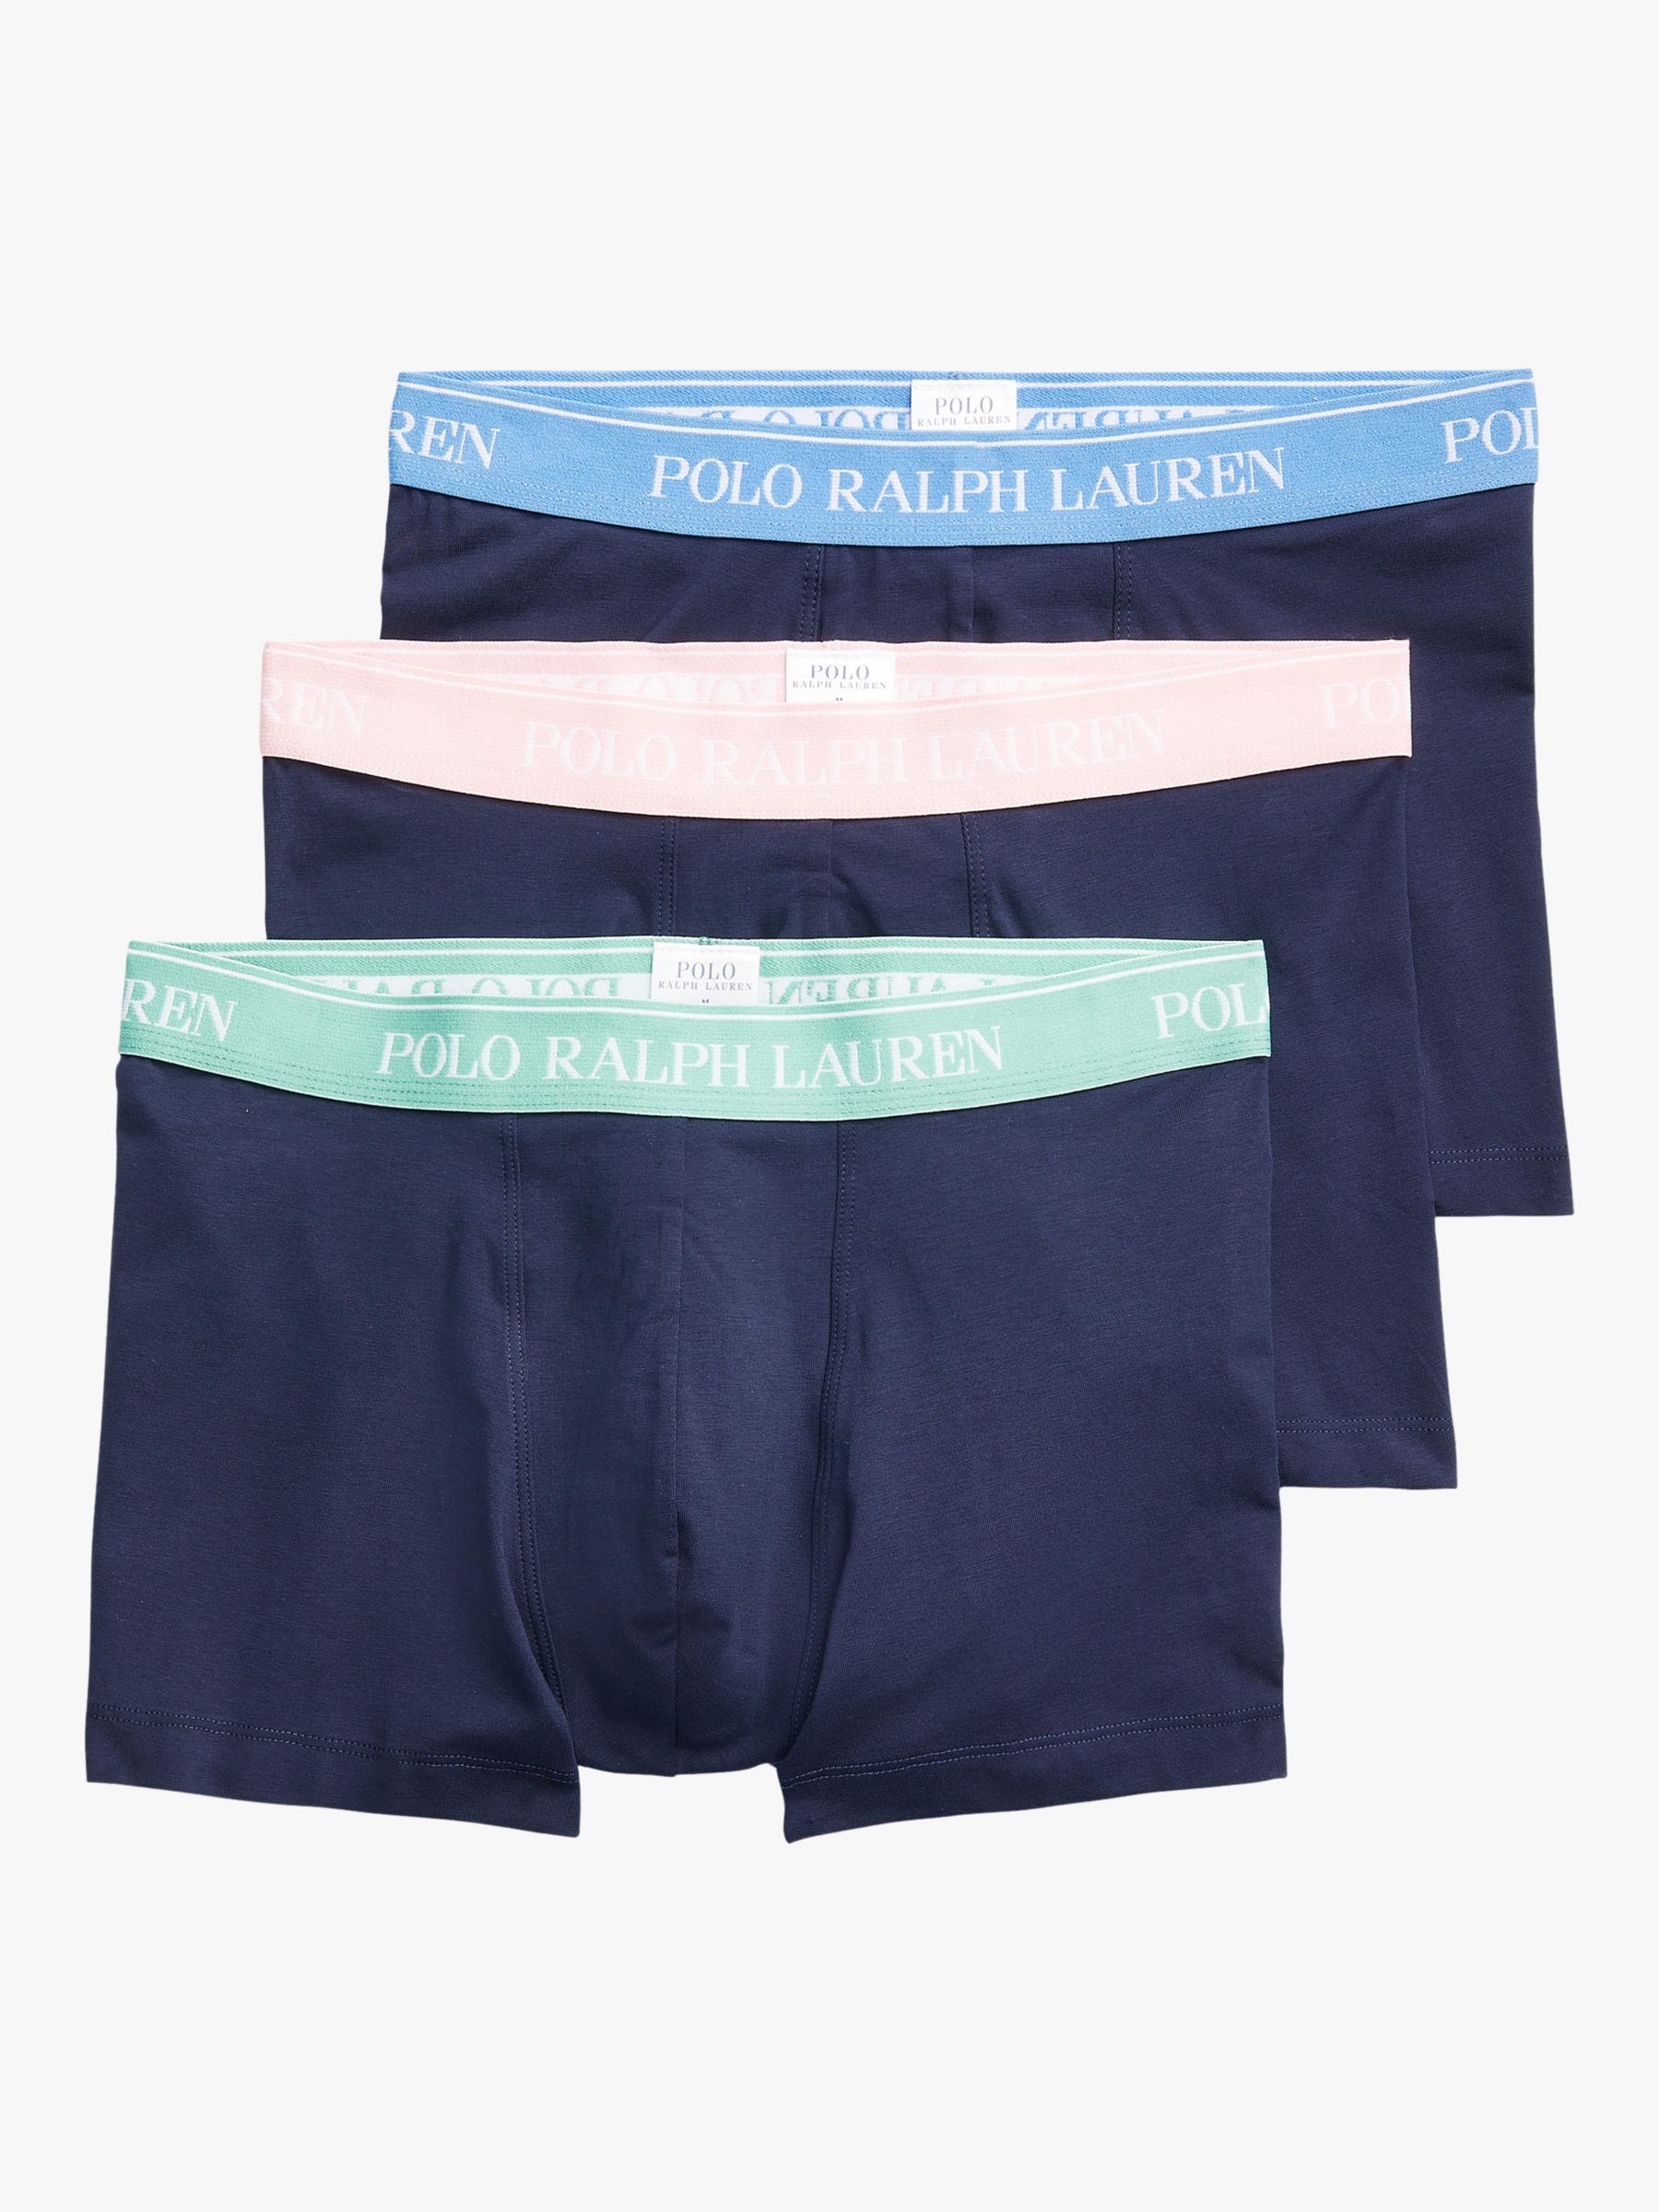 Polo Ralph Lauren Cotton Trunks, Pack of 3, Navy/Blue/Pink